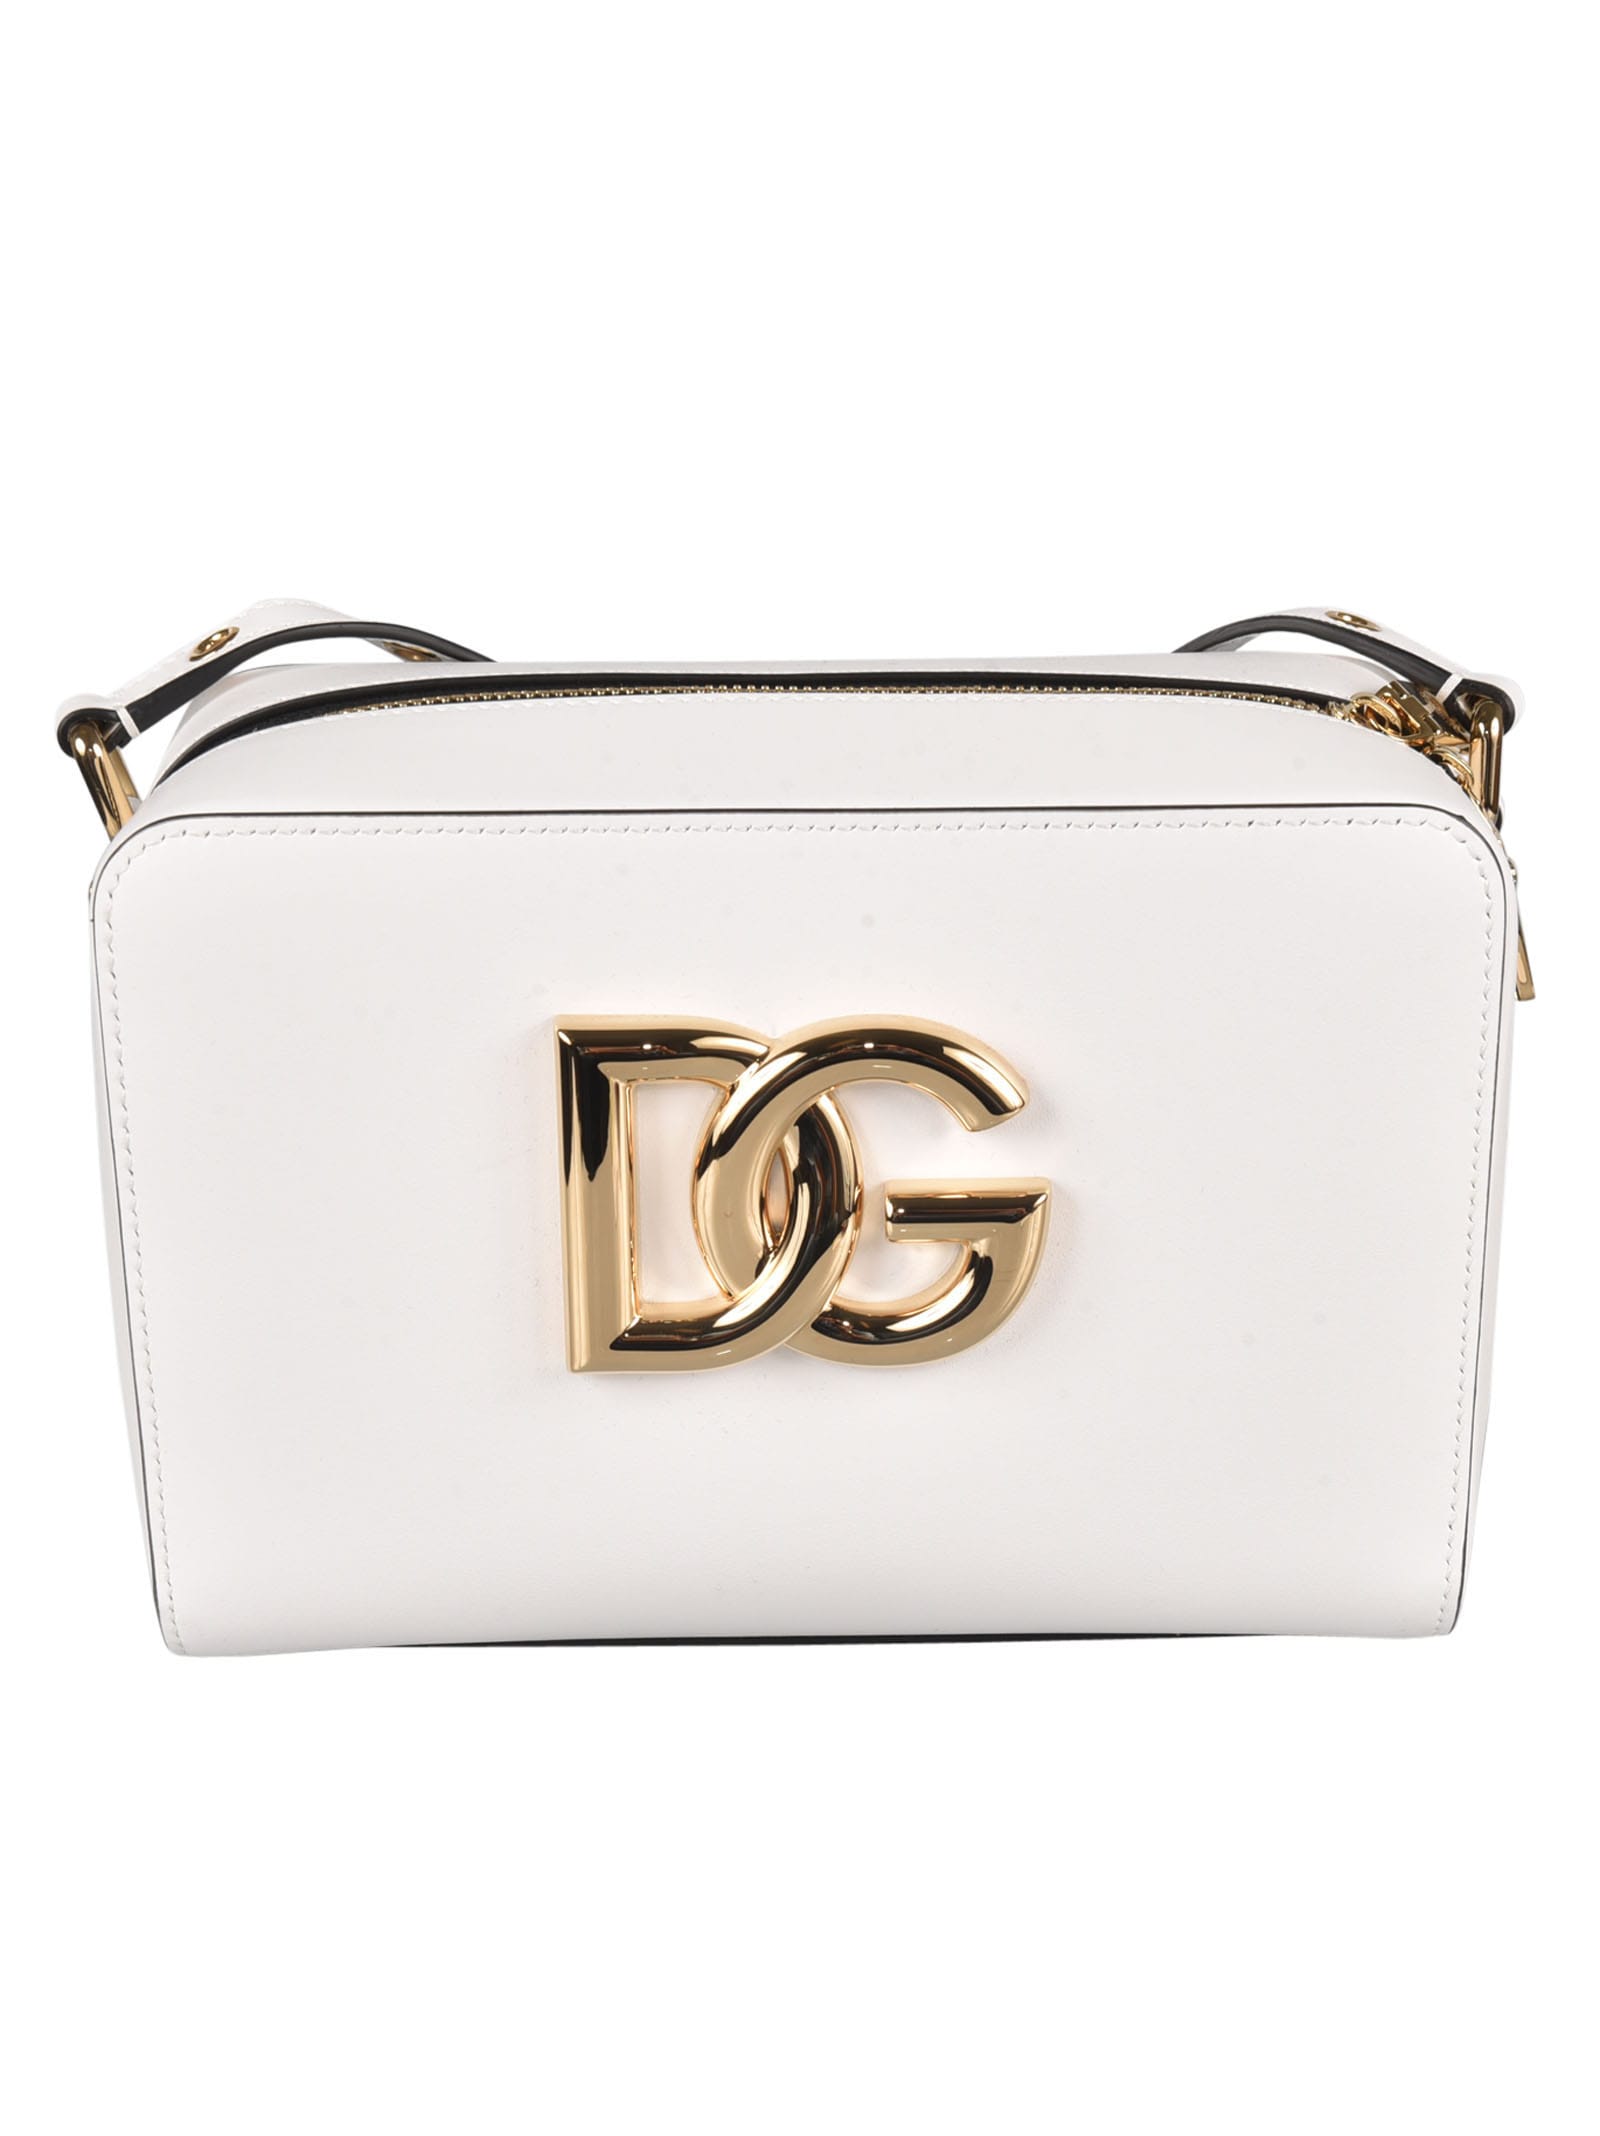 Dolce & Gabbana 3.5 Logo Plaque Medium Shoulder Bag